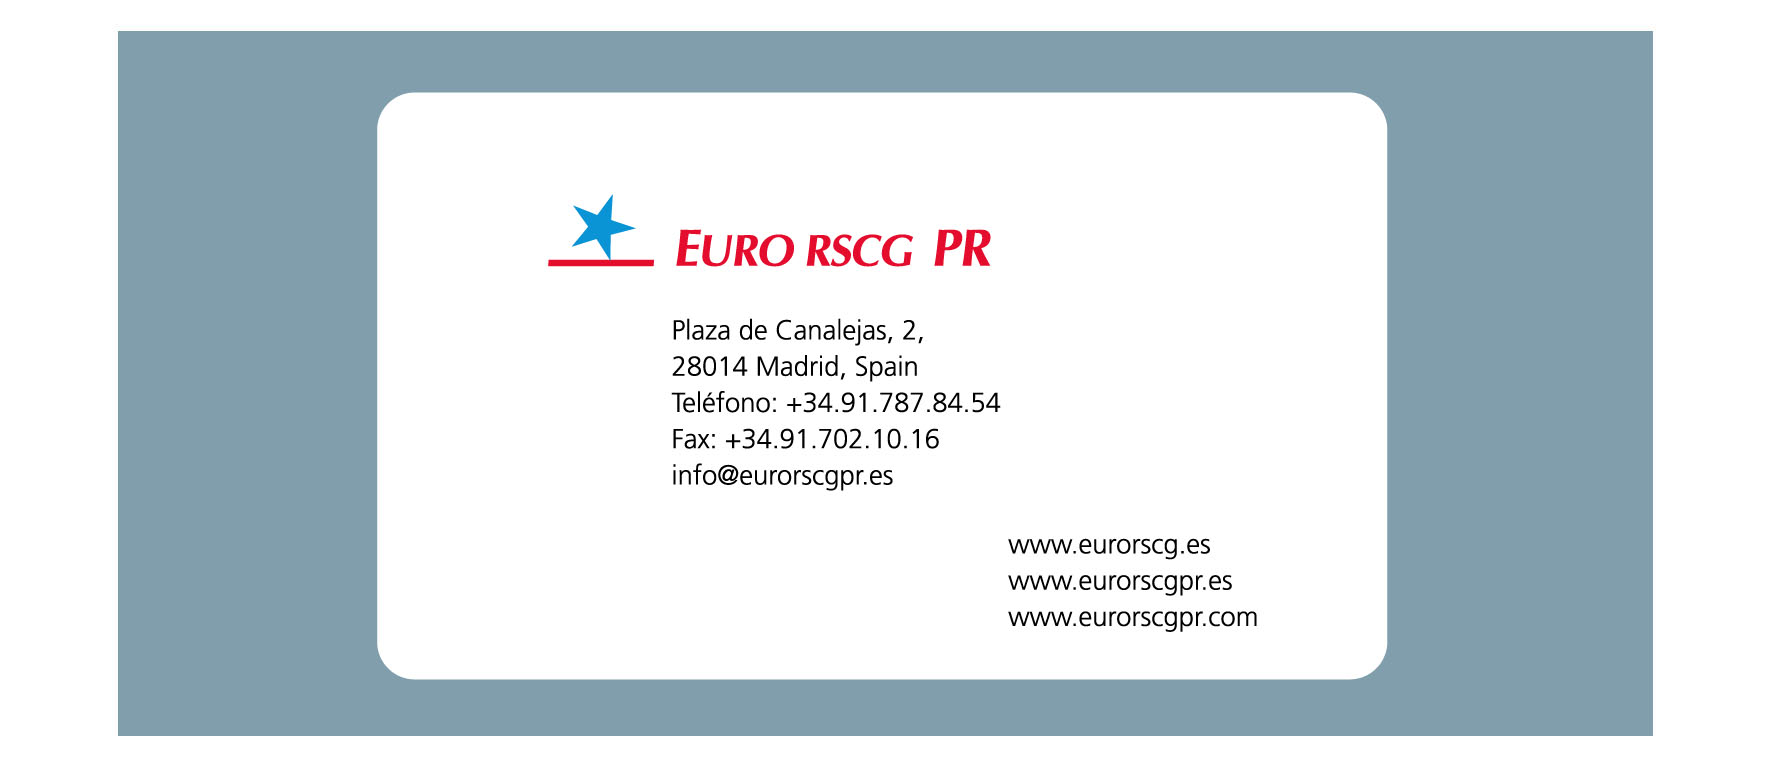 EURO RSCG PR